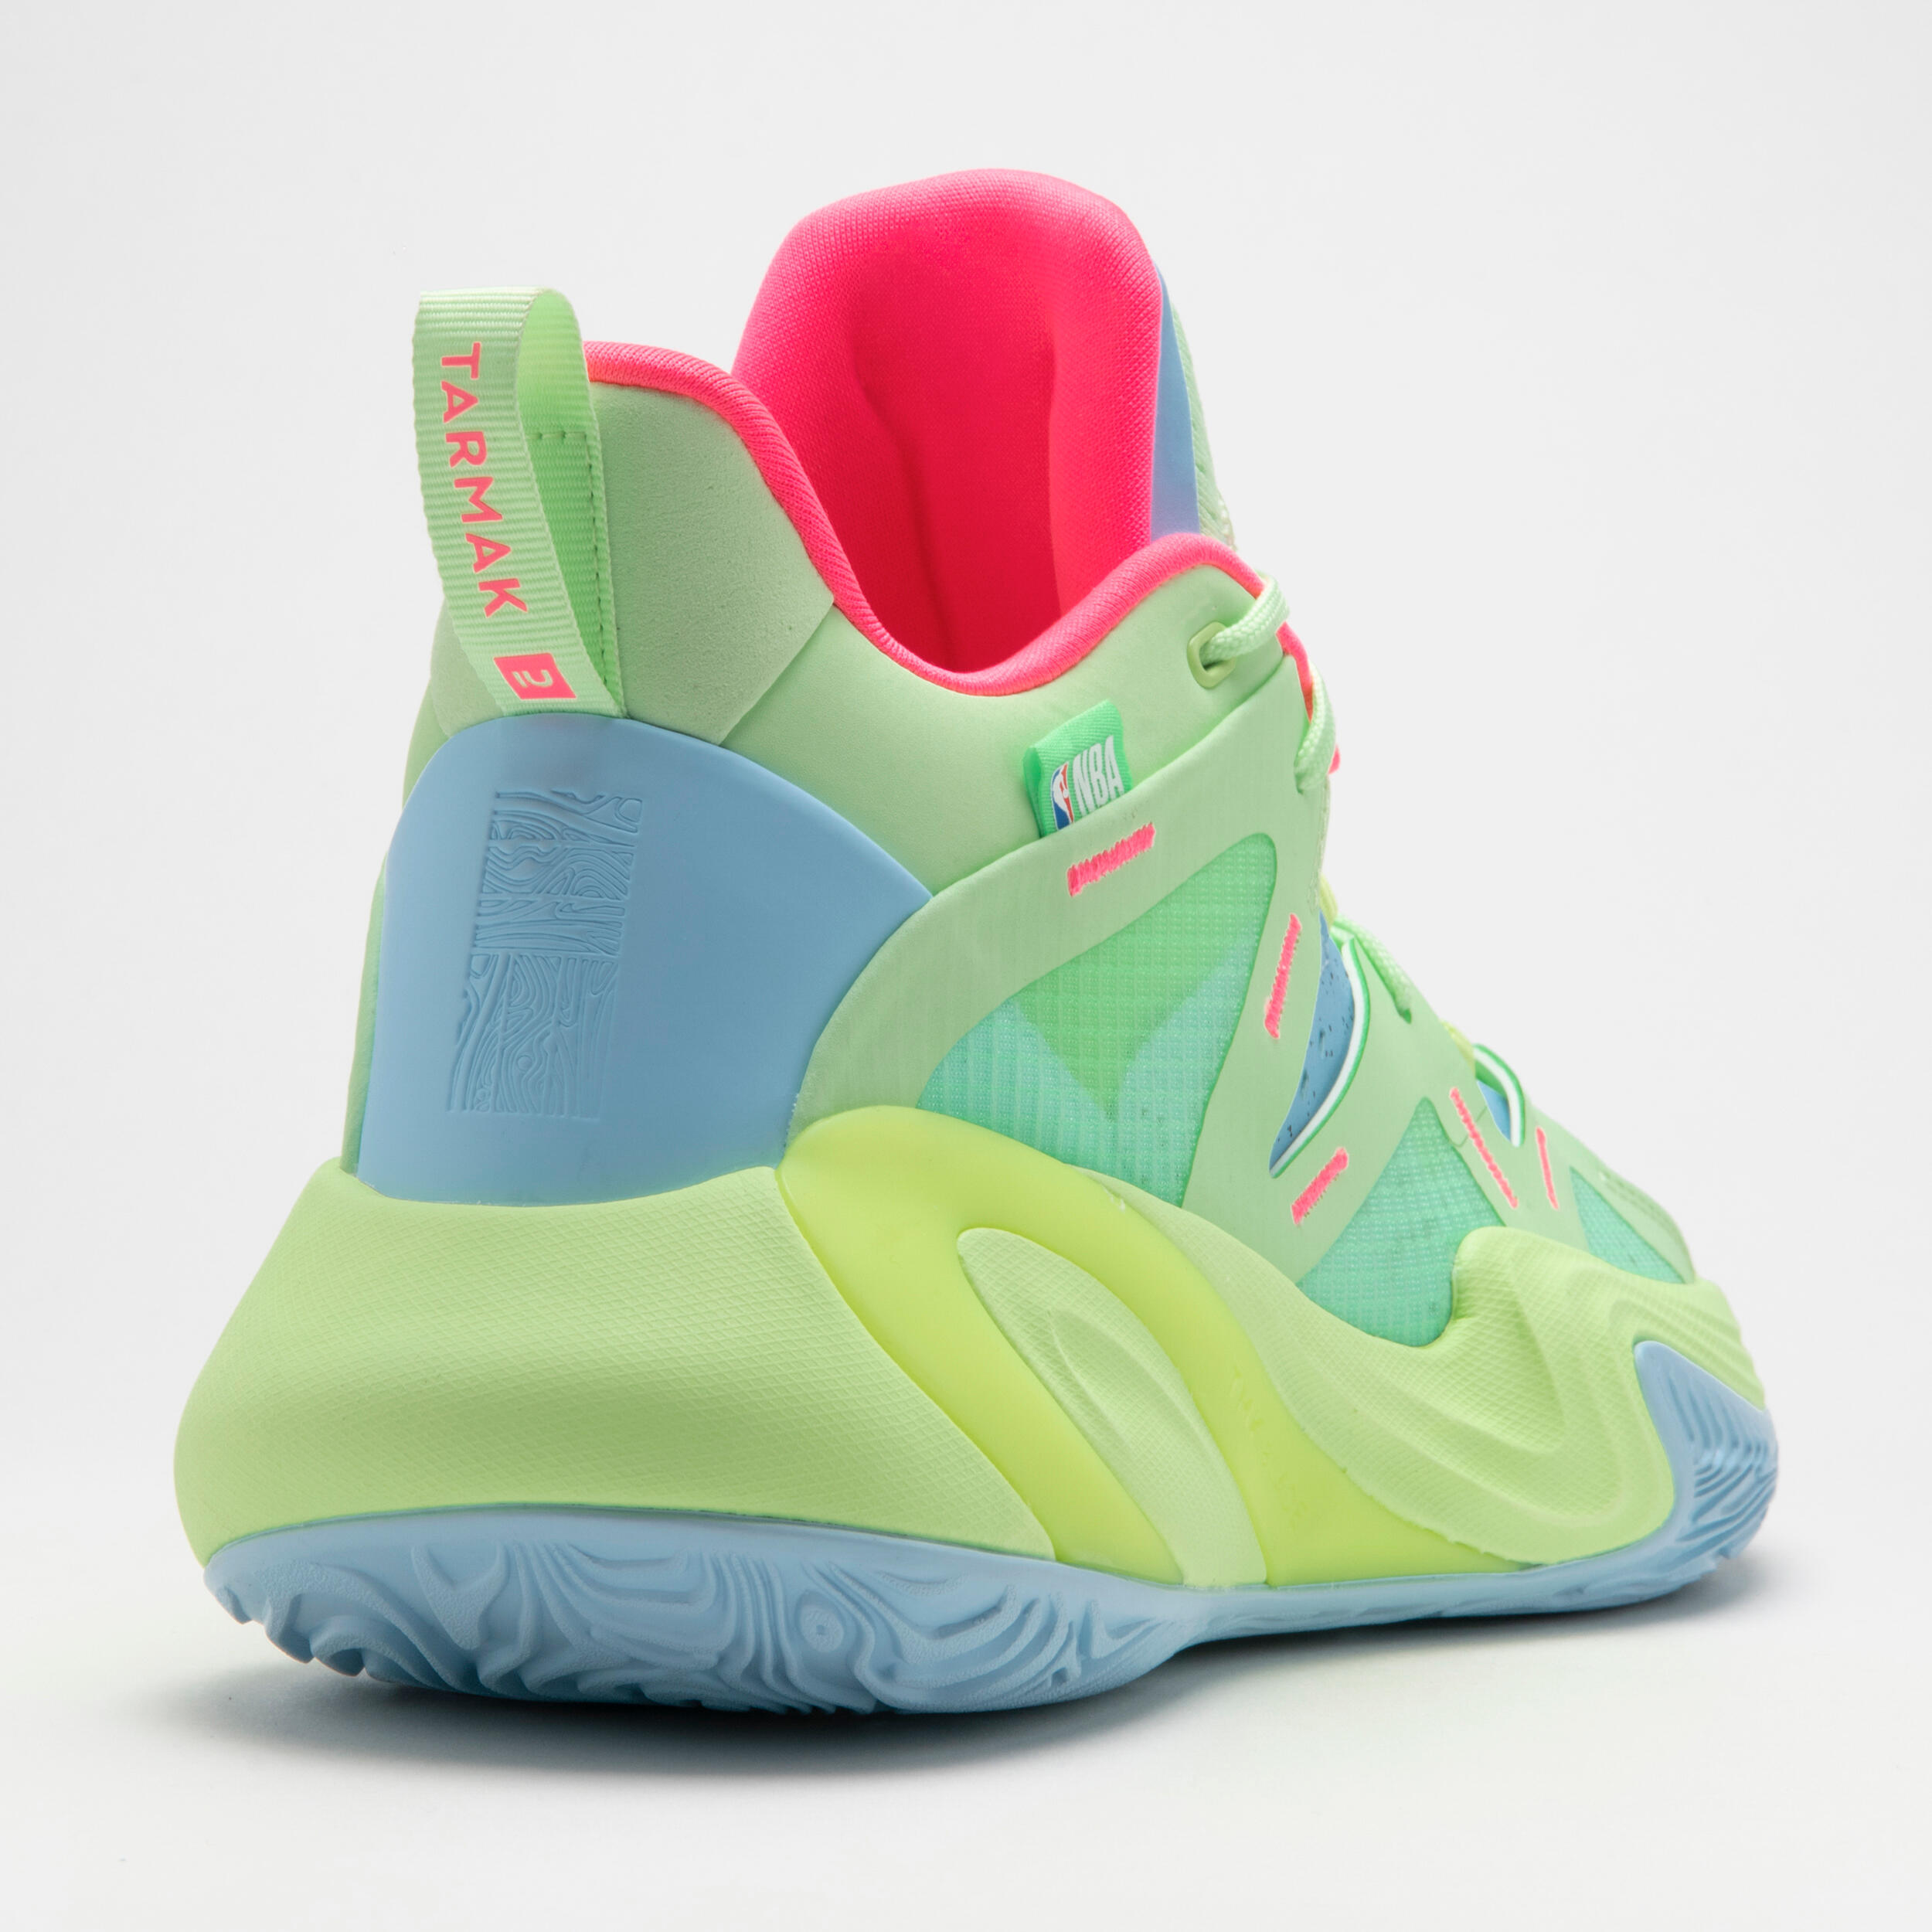 Men's/Women's Basketball Shoes 900 NBA MID-3 - Boston Celtics/Green 5/11